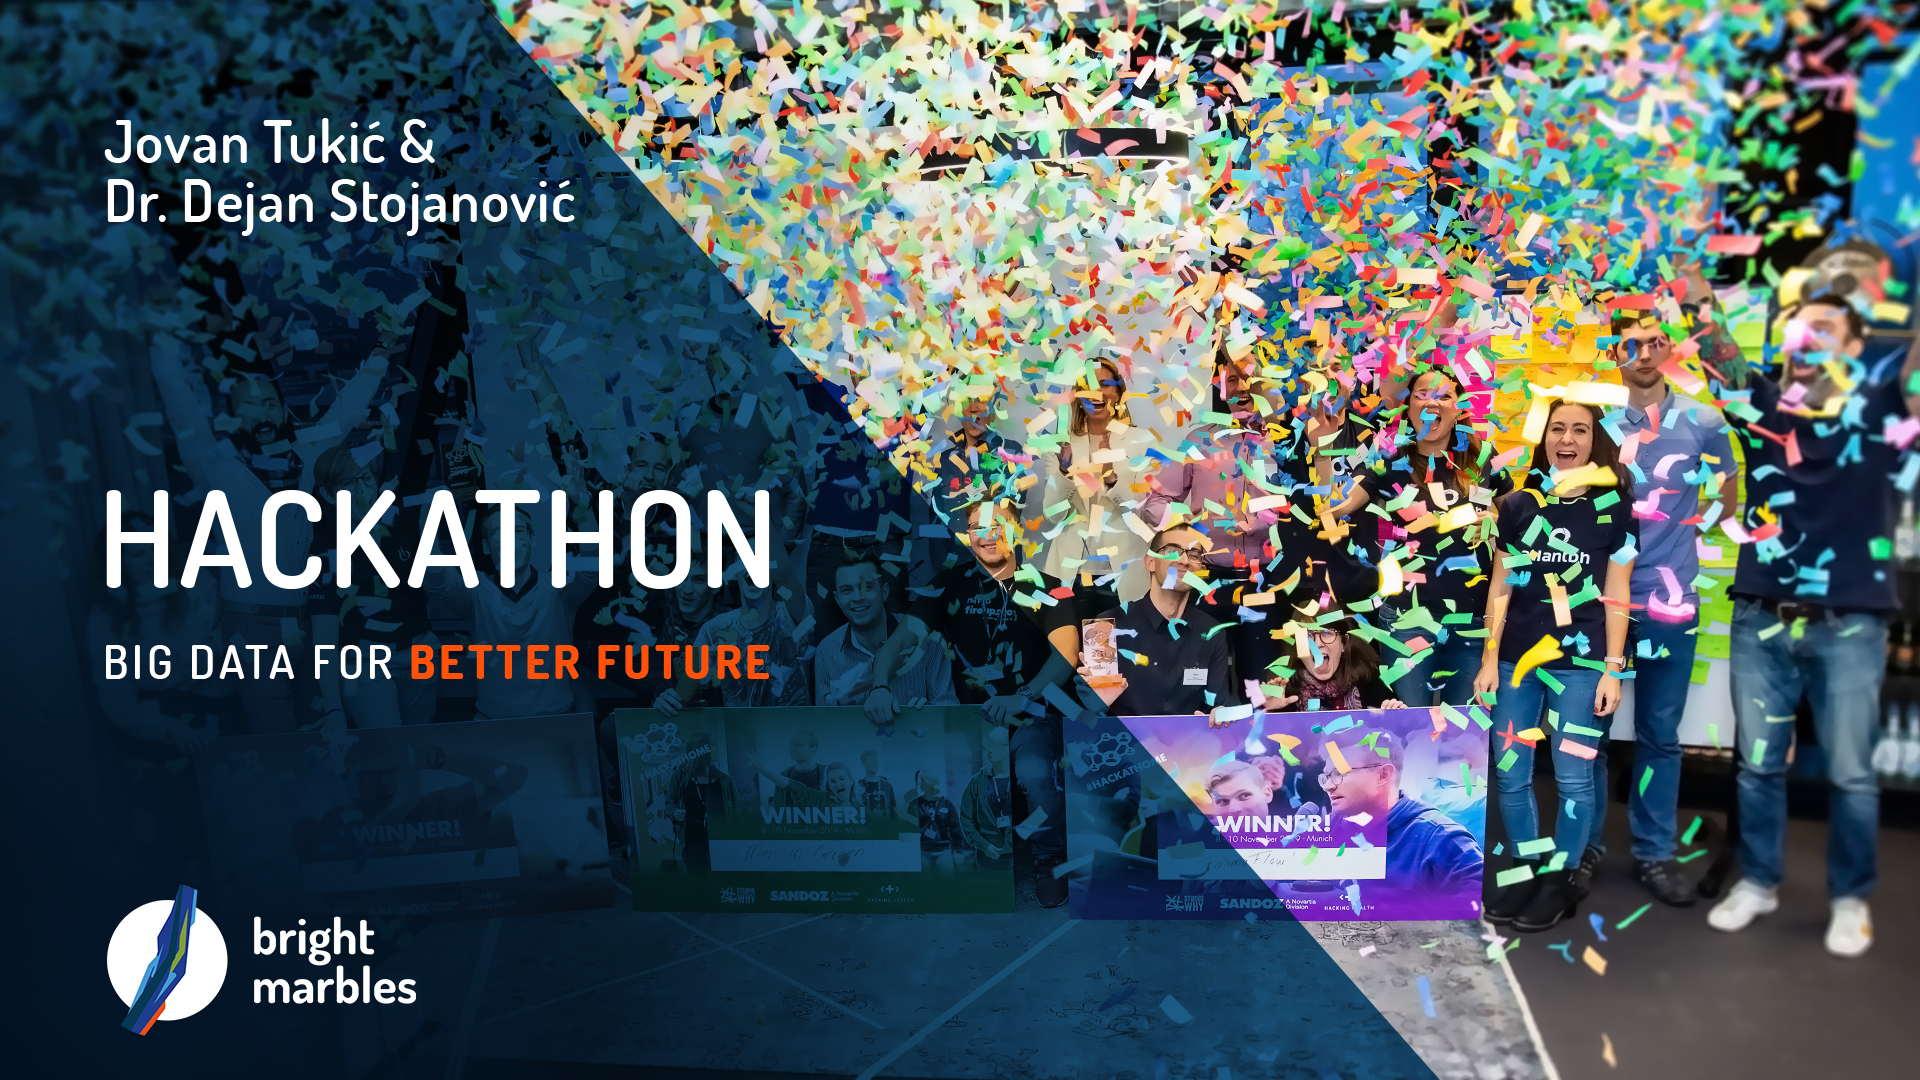 Hackathon - Big data for better future